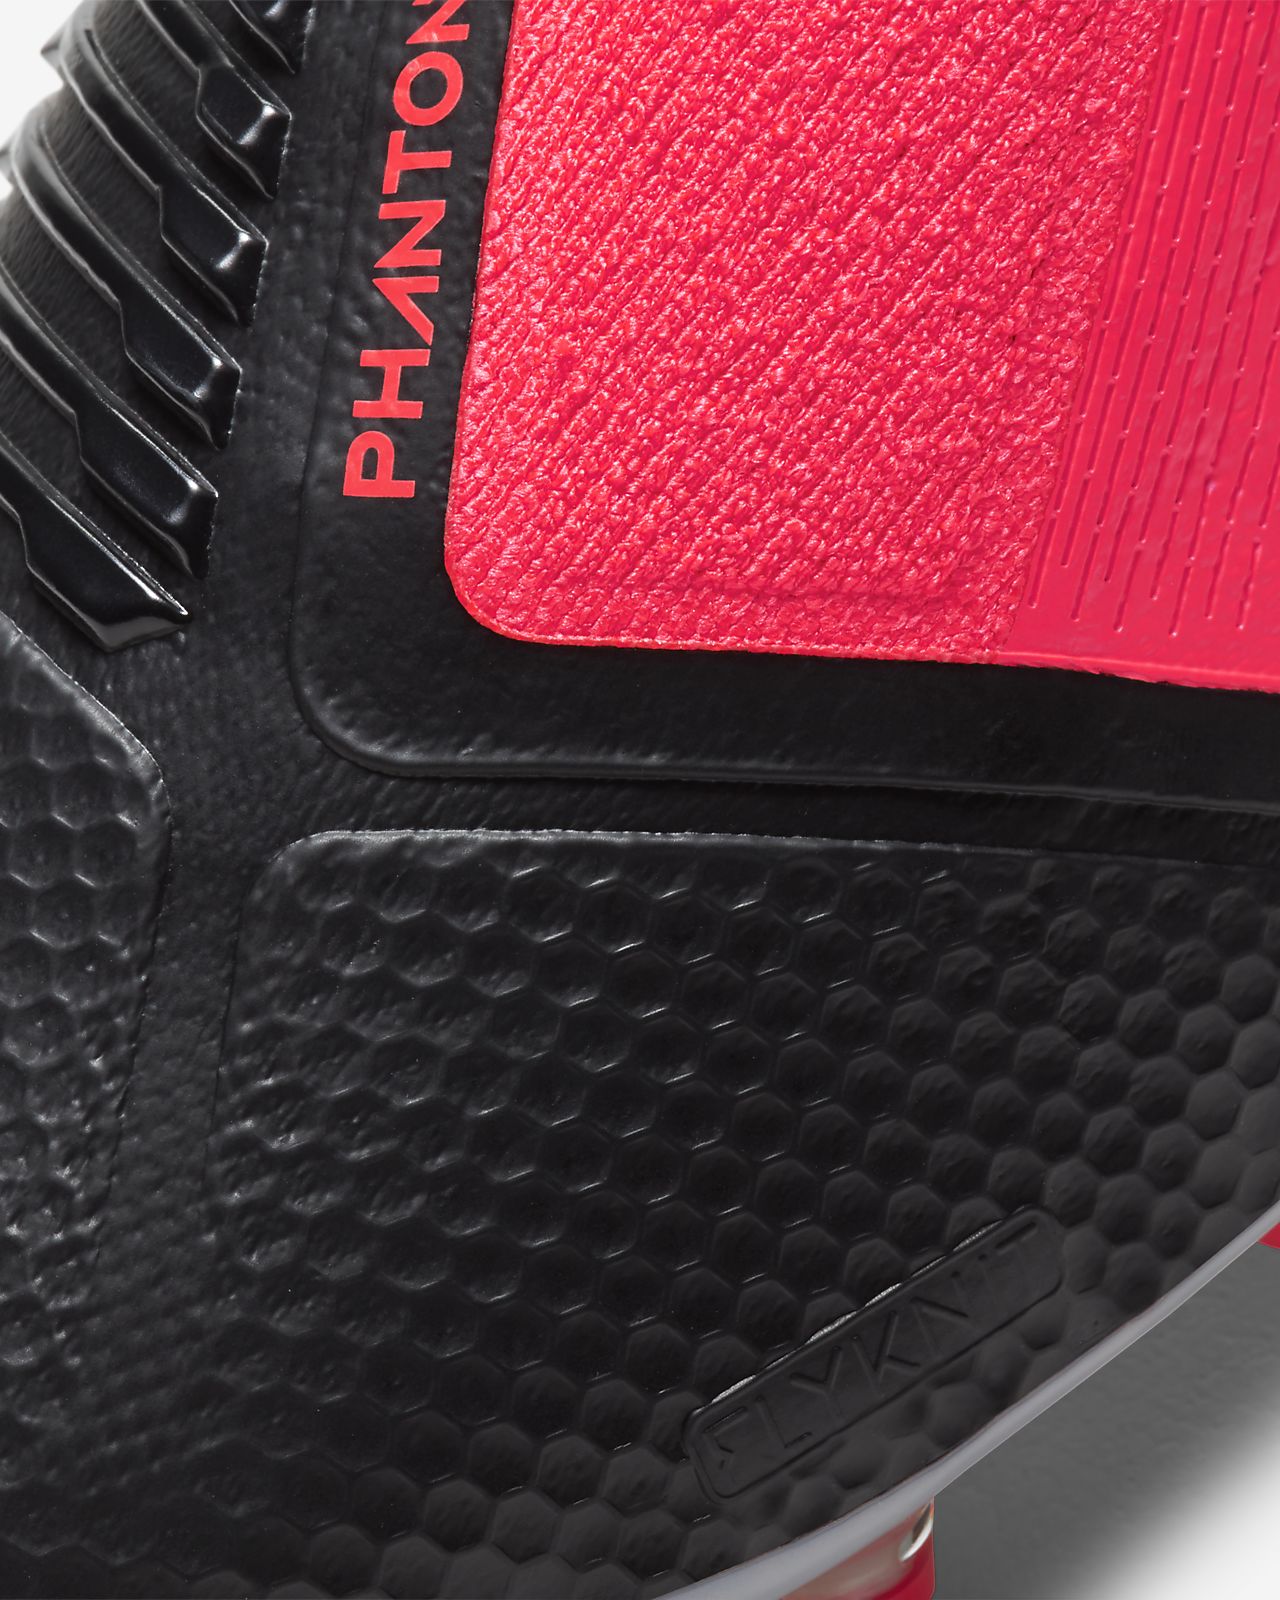 Sepatu Futsal Nike Phantom Venom Pro Future Lab IC Shopee